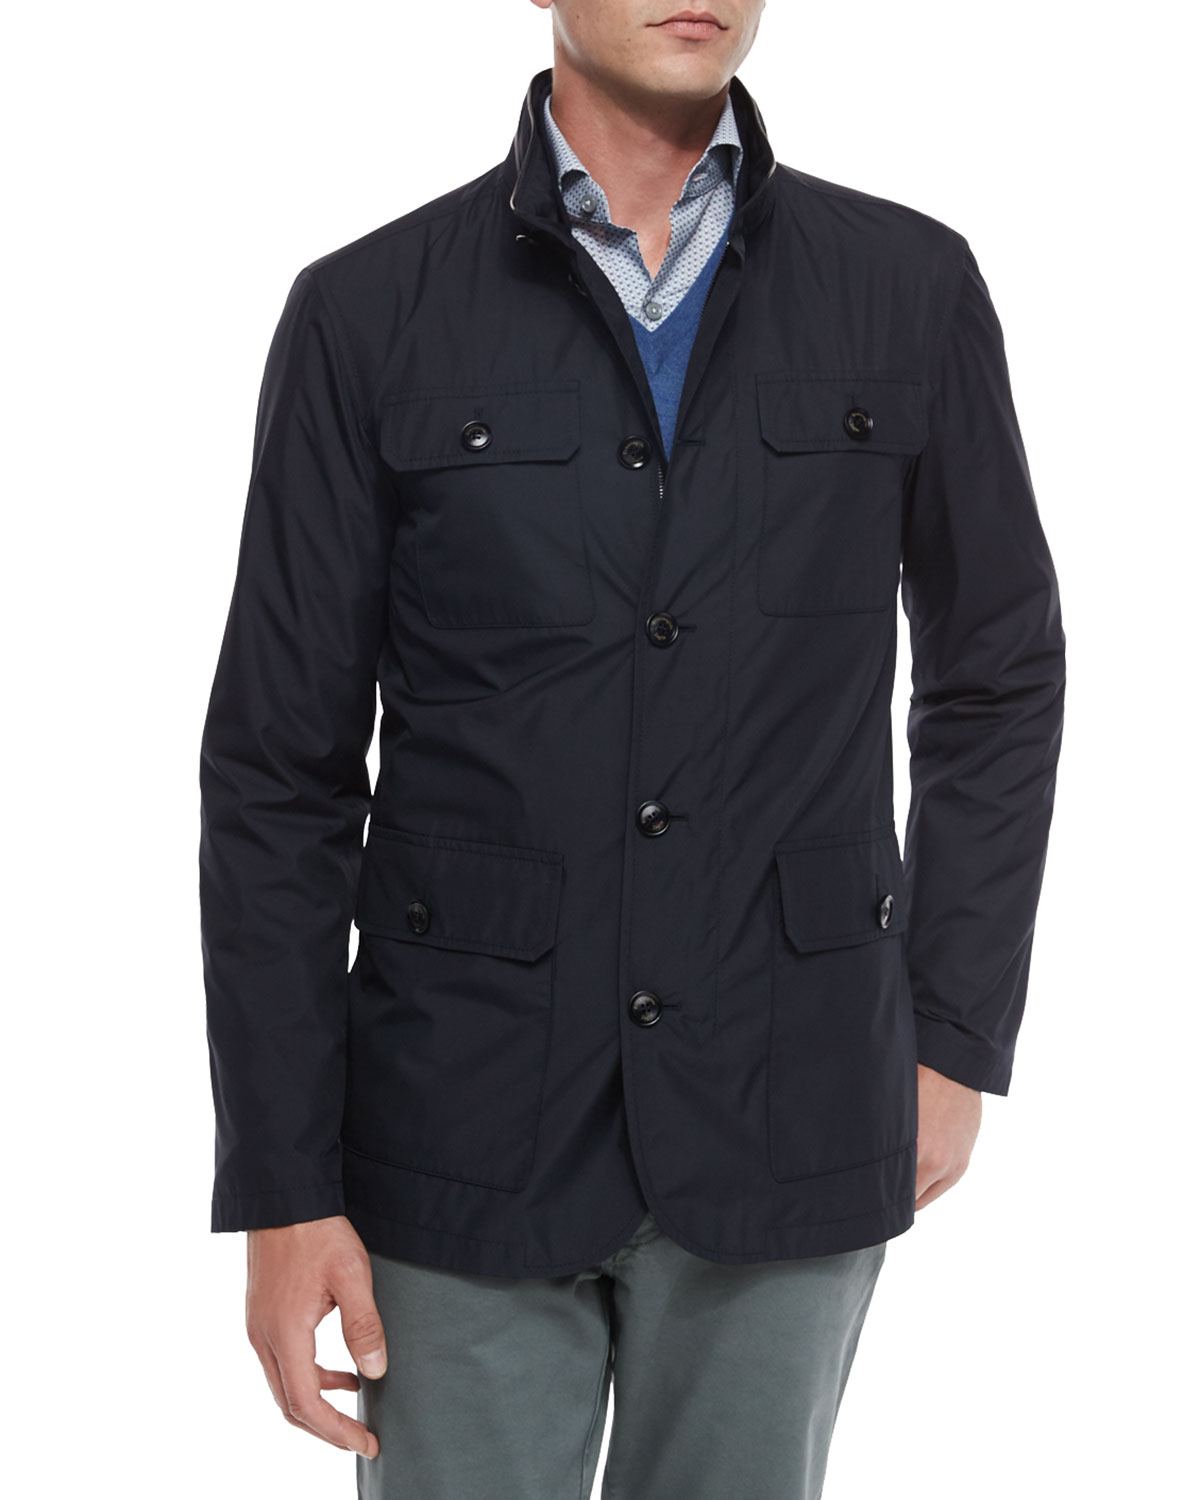 Ermenegildo Zegna Four-pocket Quilted Safari Jacket in Black for Men - Lyst